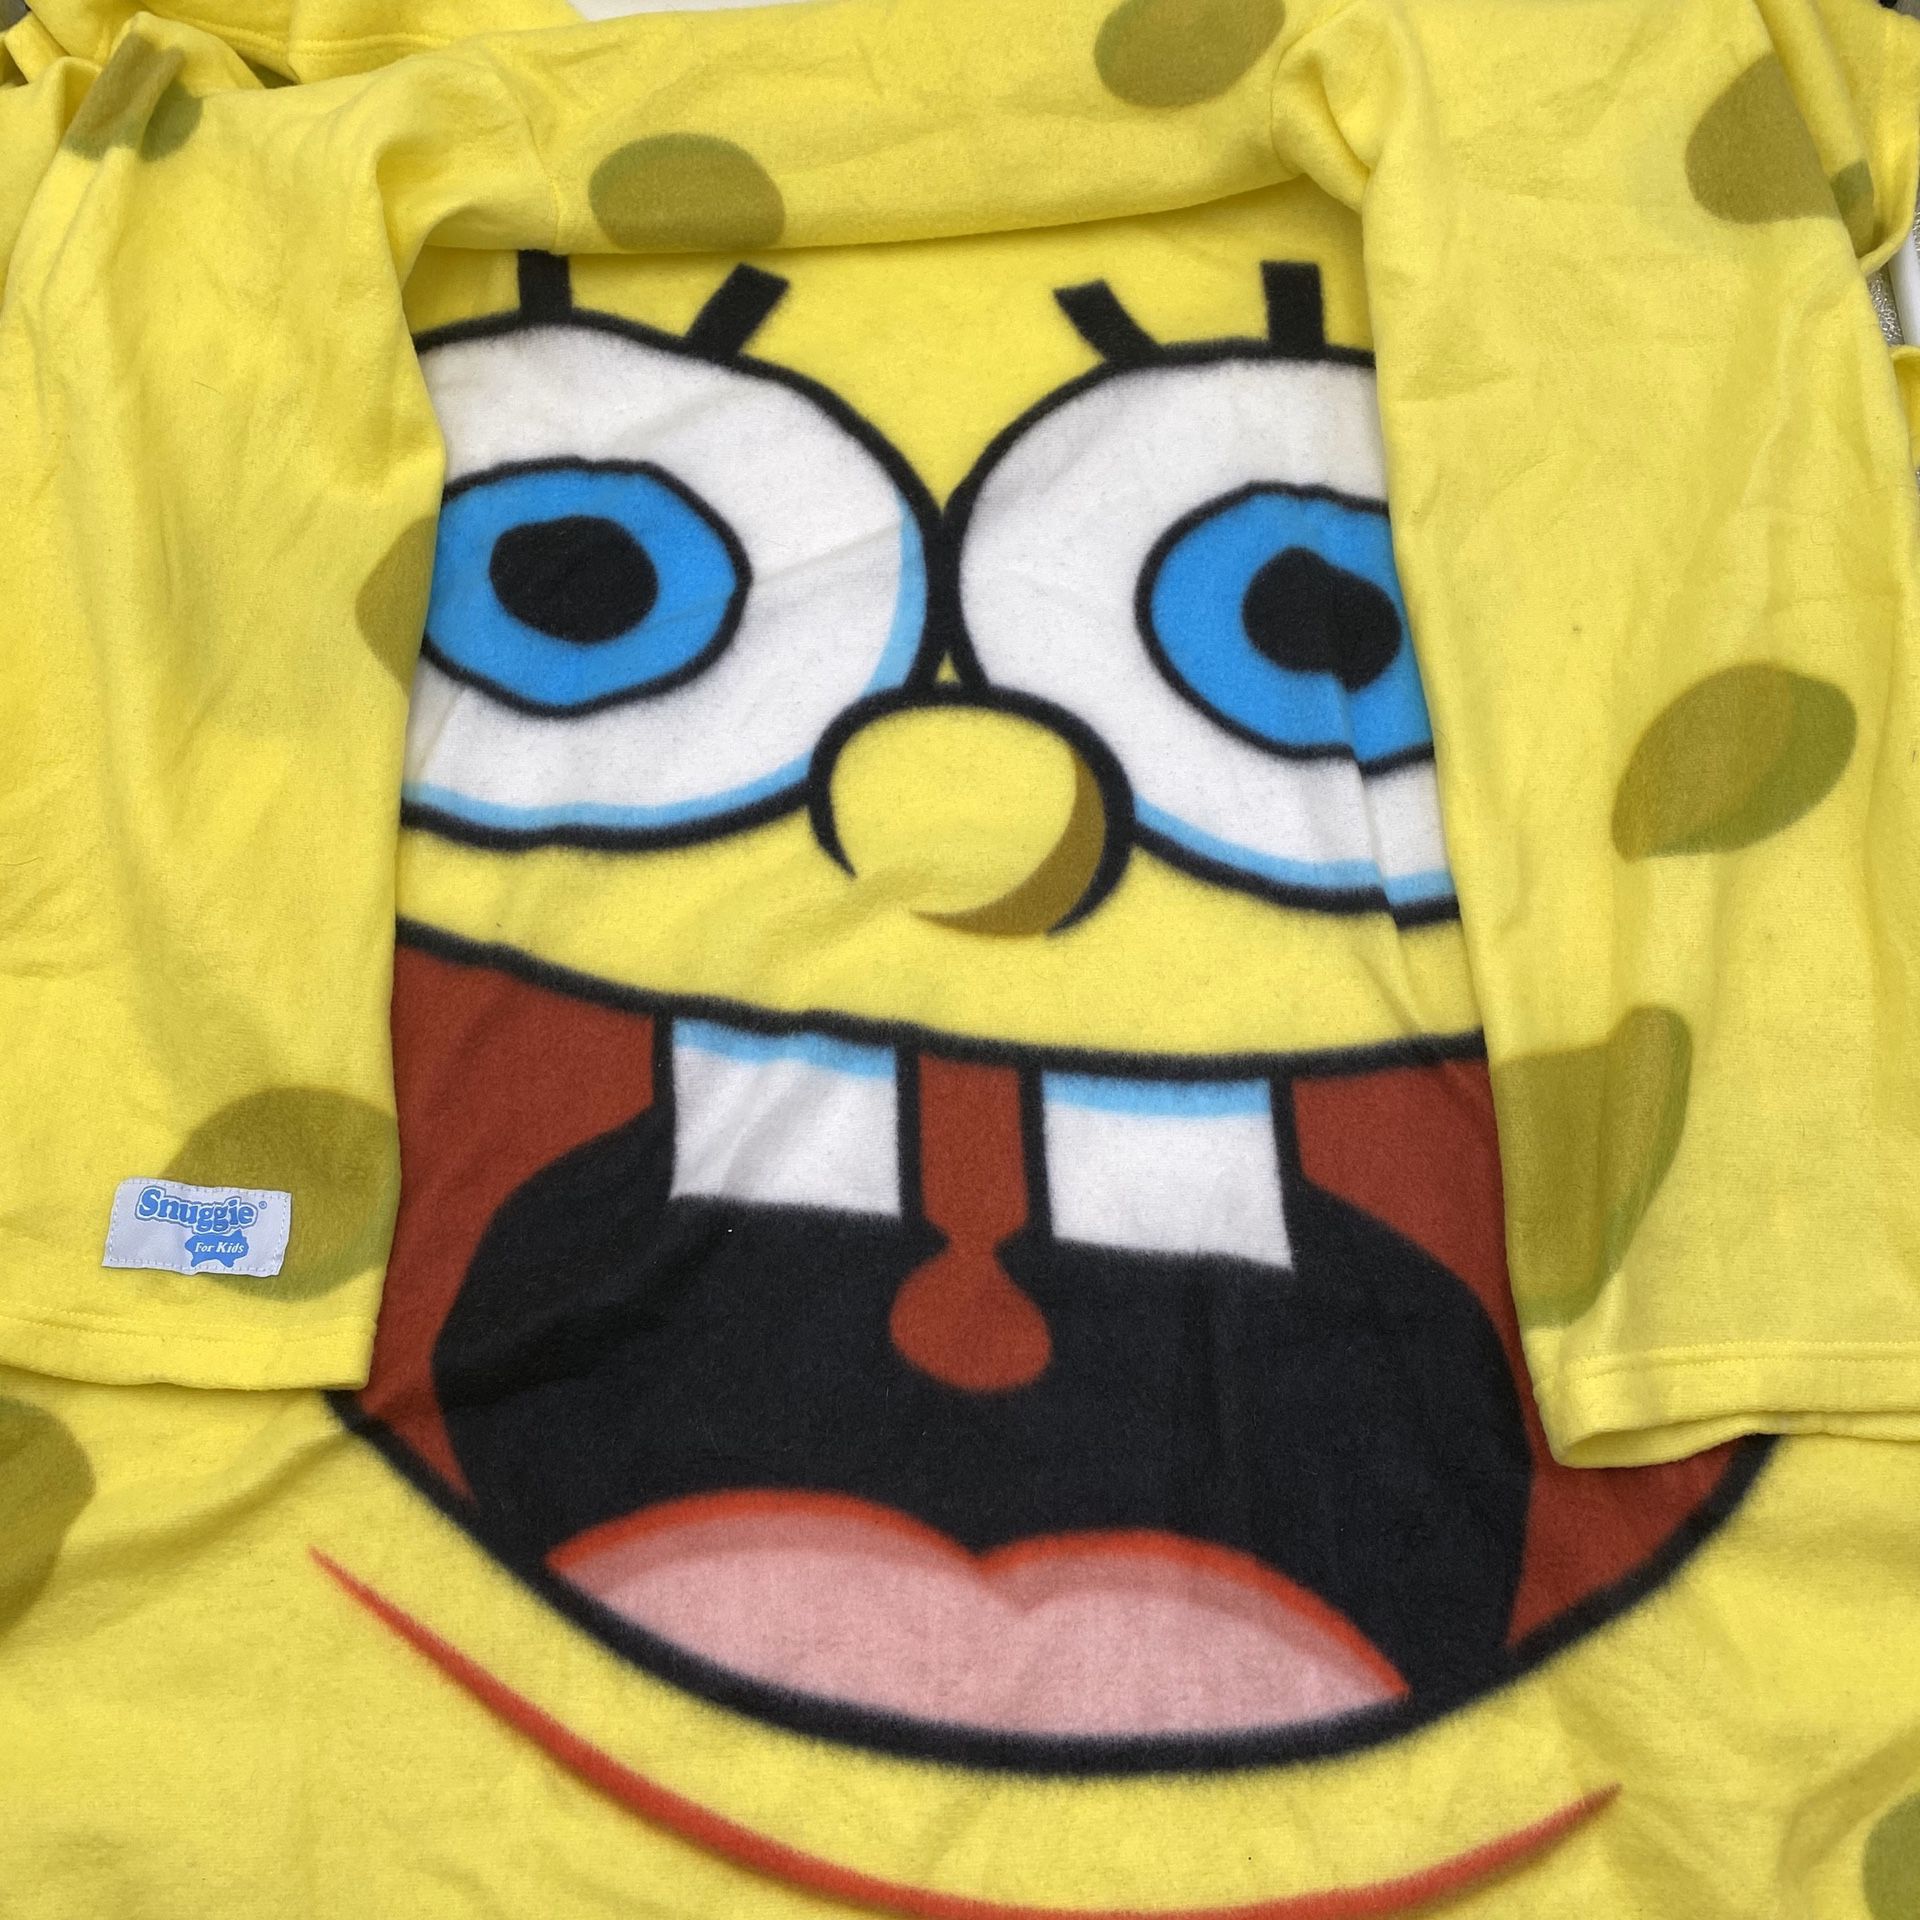 Spongebob - Snuggie for Kids